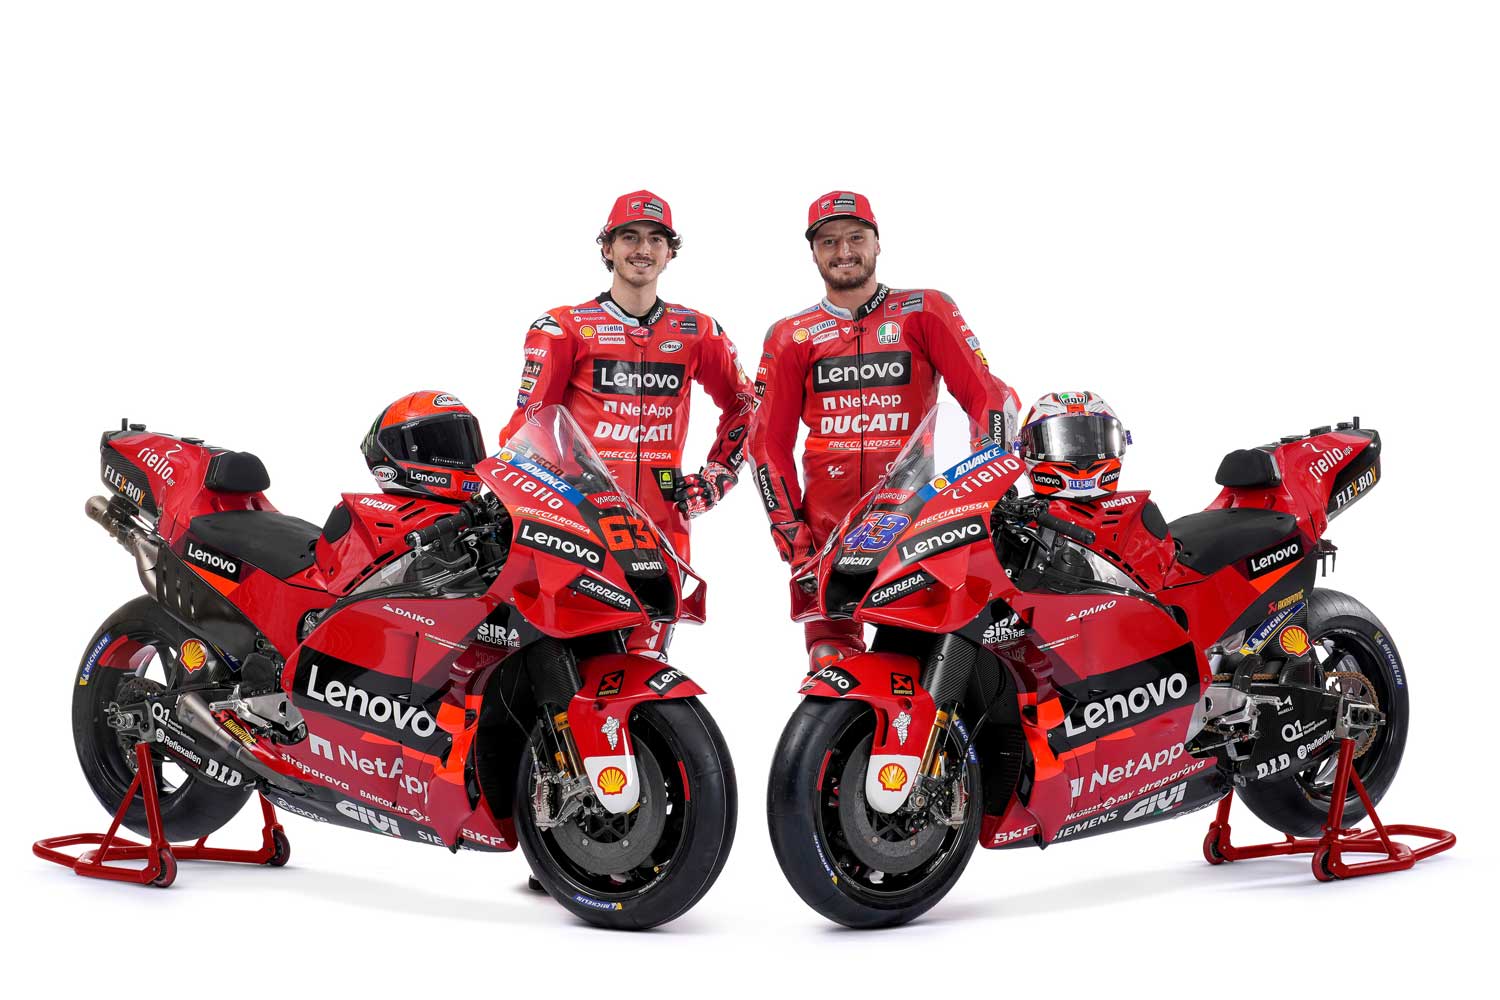 Equipe Ducati MotoGP para 2022. Bagnaia e Miller continuam na equipe oficial.